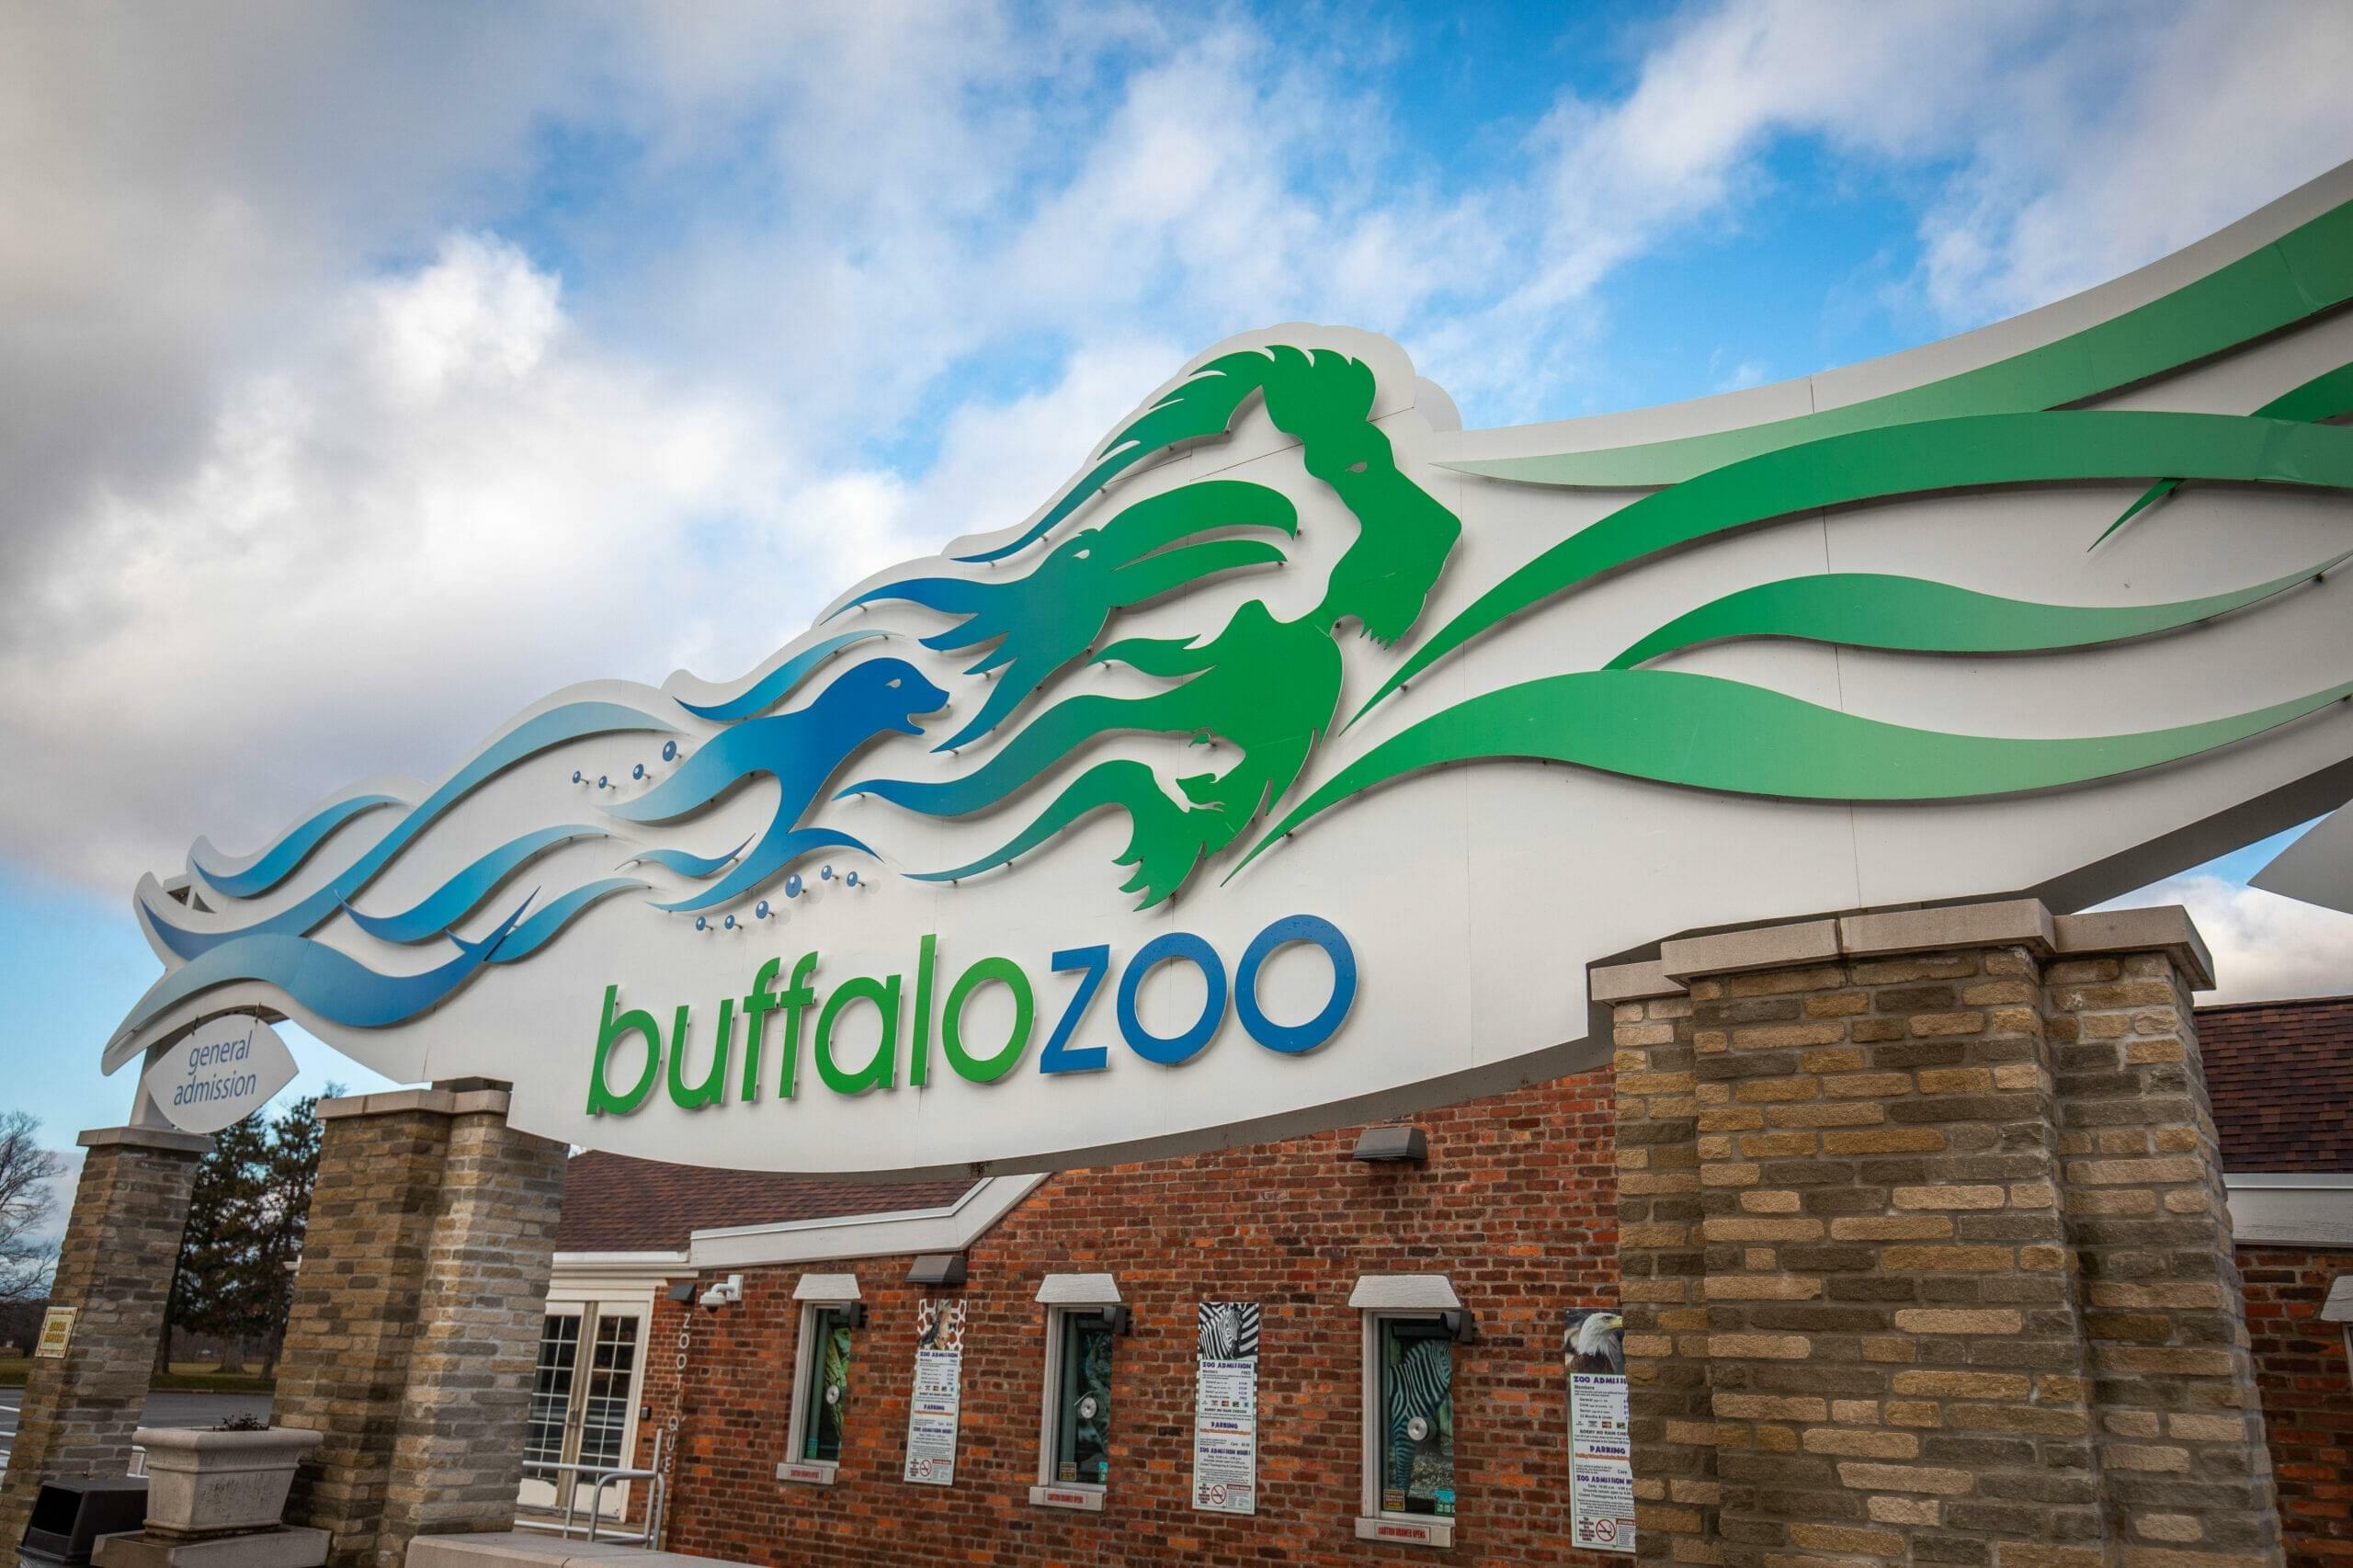 Delaware Park & Buffalo Zoo